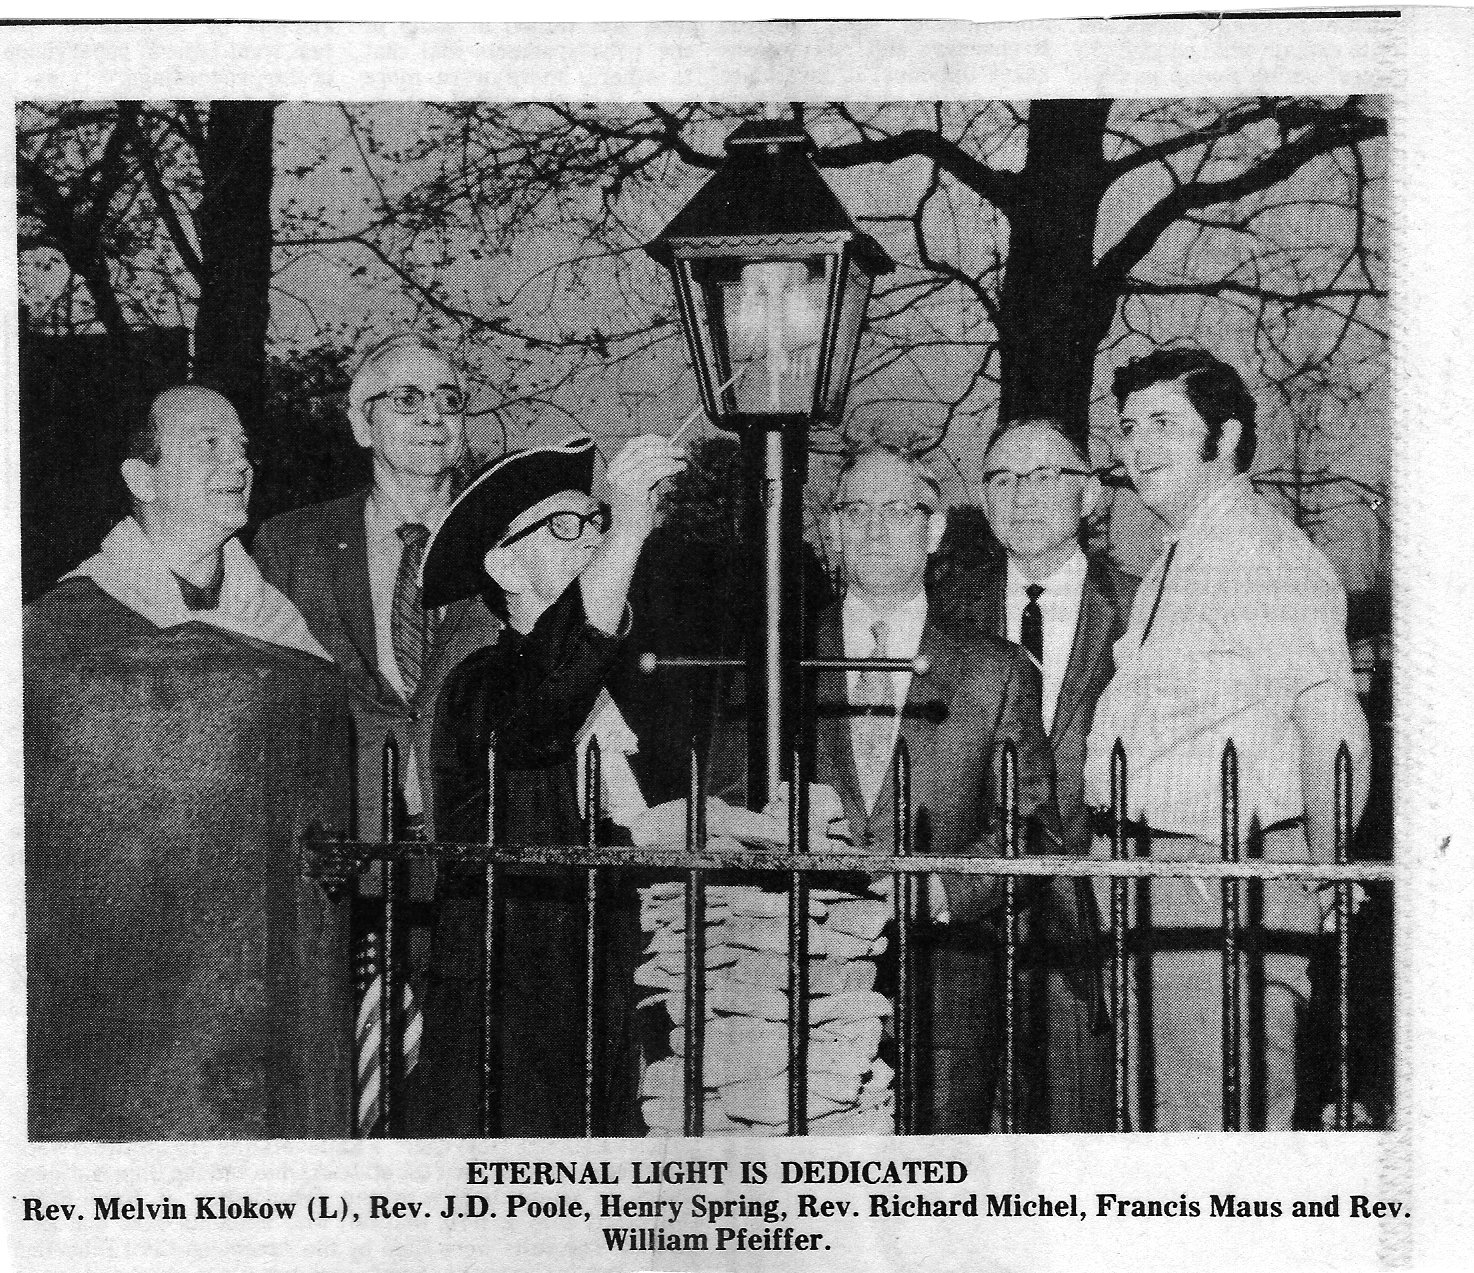 Dedication of the eternal light at the Zeisberger Cemetery in Goshen 1970s